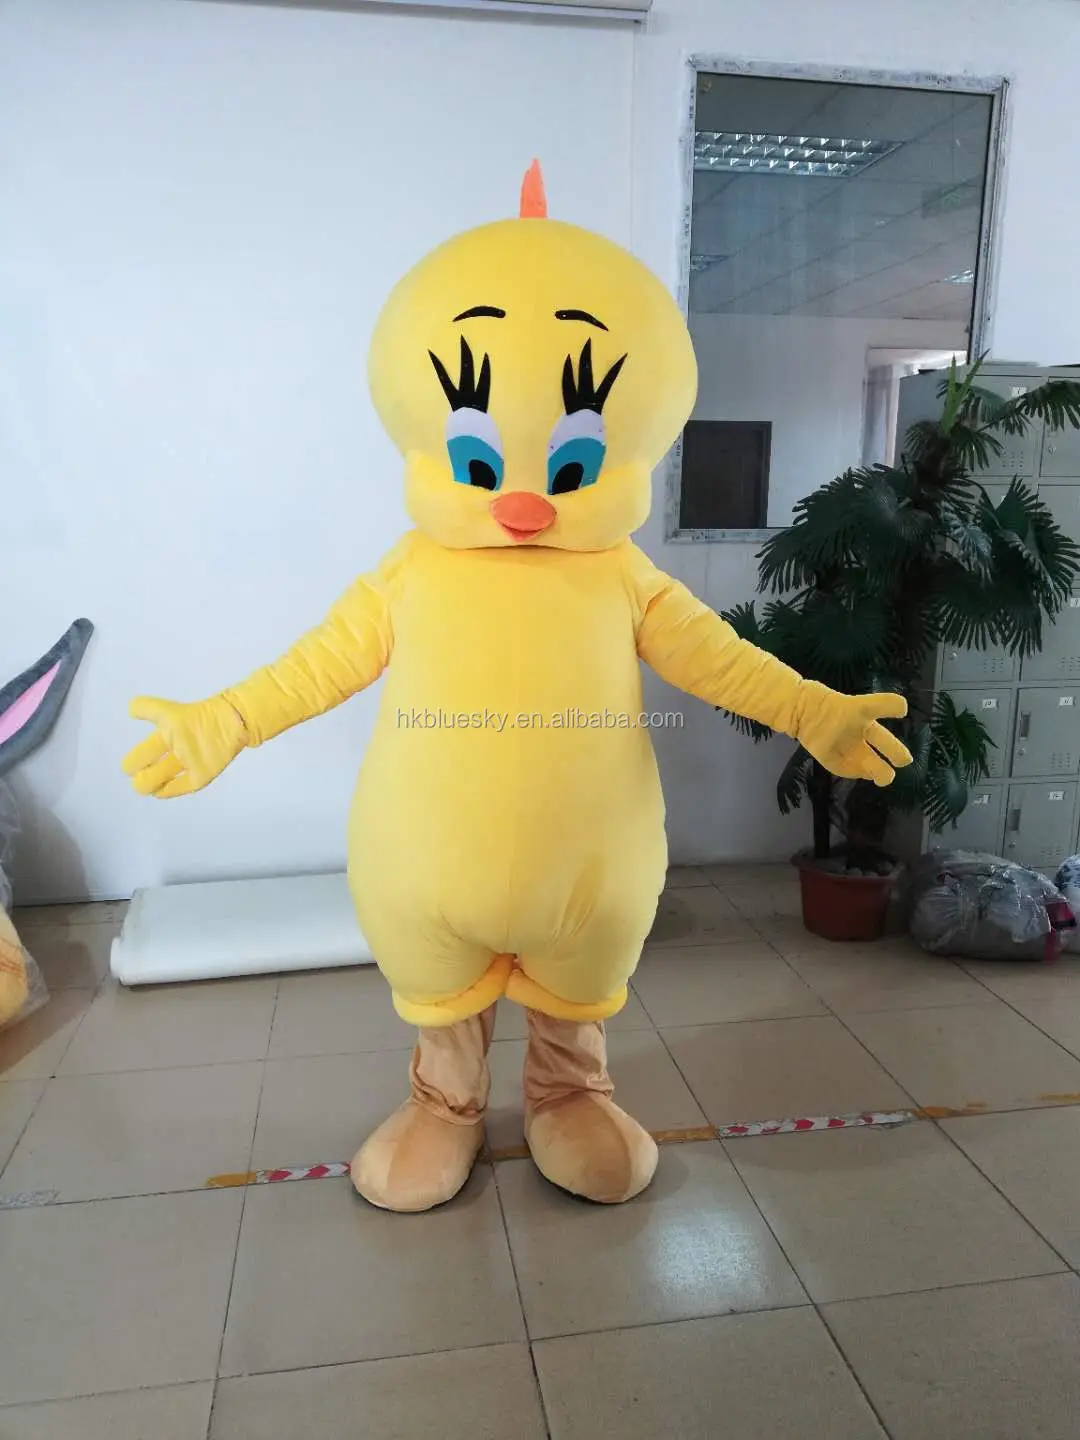 High Quality Plush Tweety Mascot Costume For Sale - Buy Tweety Mascot  Costume,Tweety Mascot Costume,Yelow Bird Mascot Costume Product on  